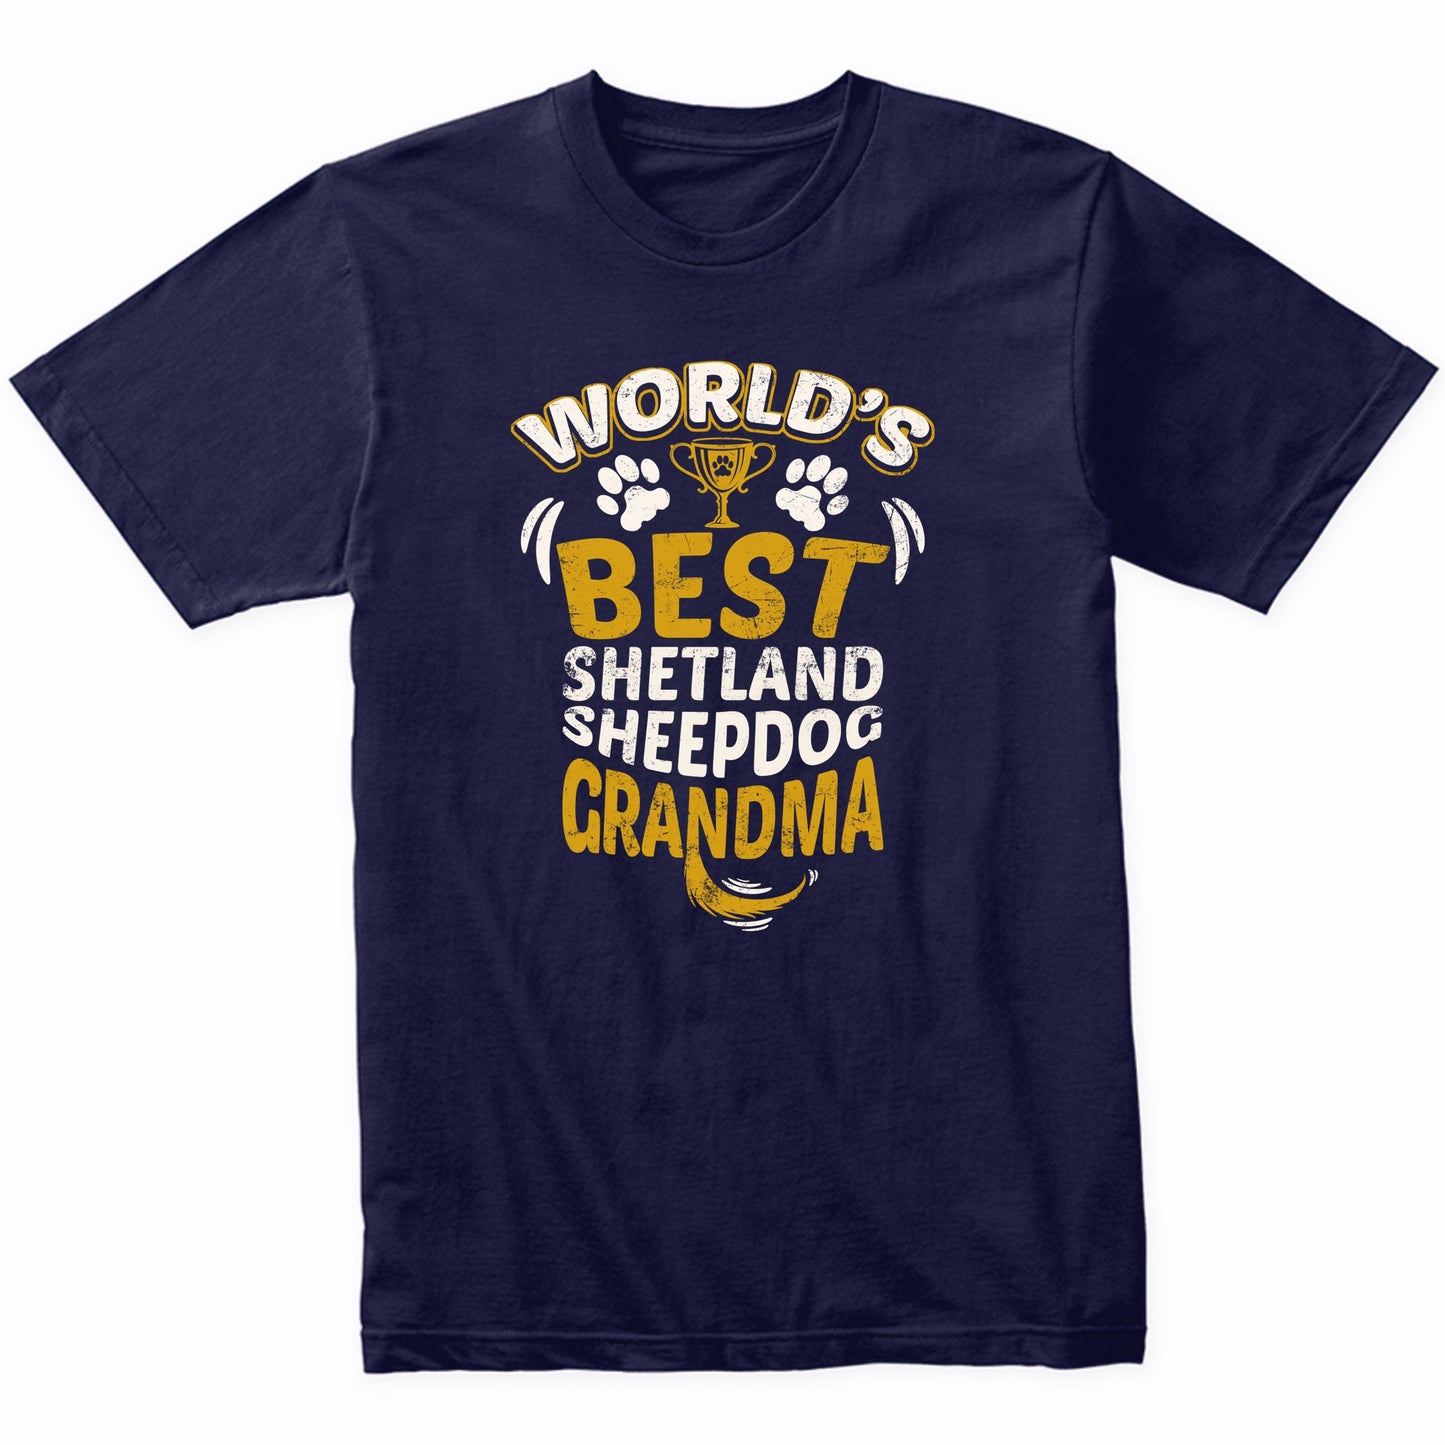 World's Best Shetland Sheepdog Grandma Graphic T-Shirt